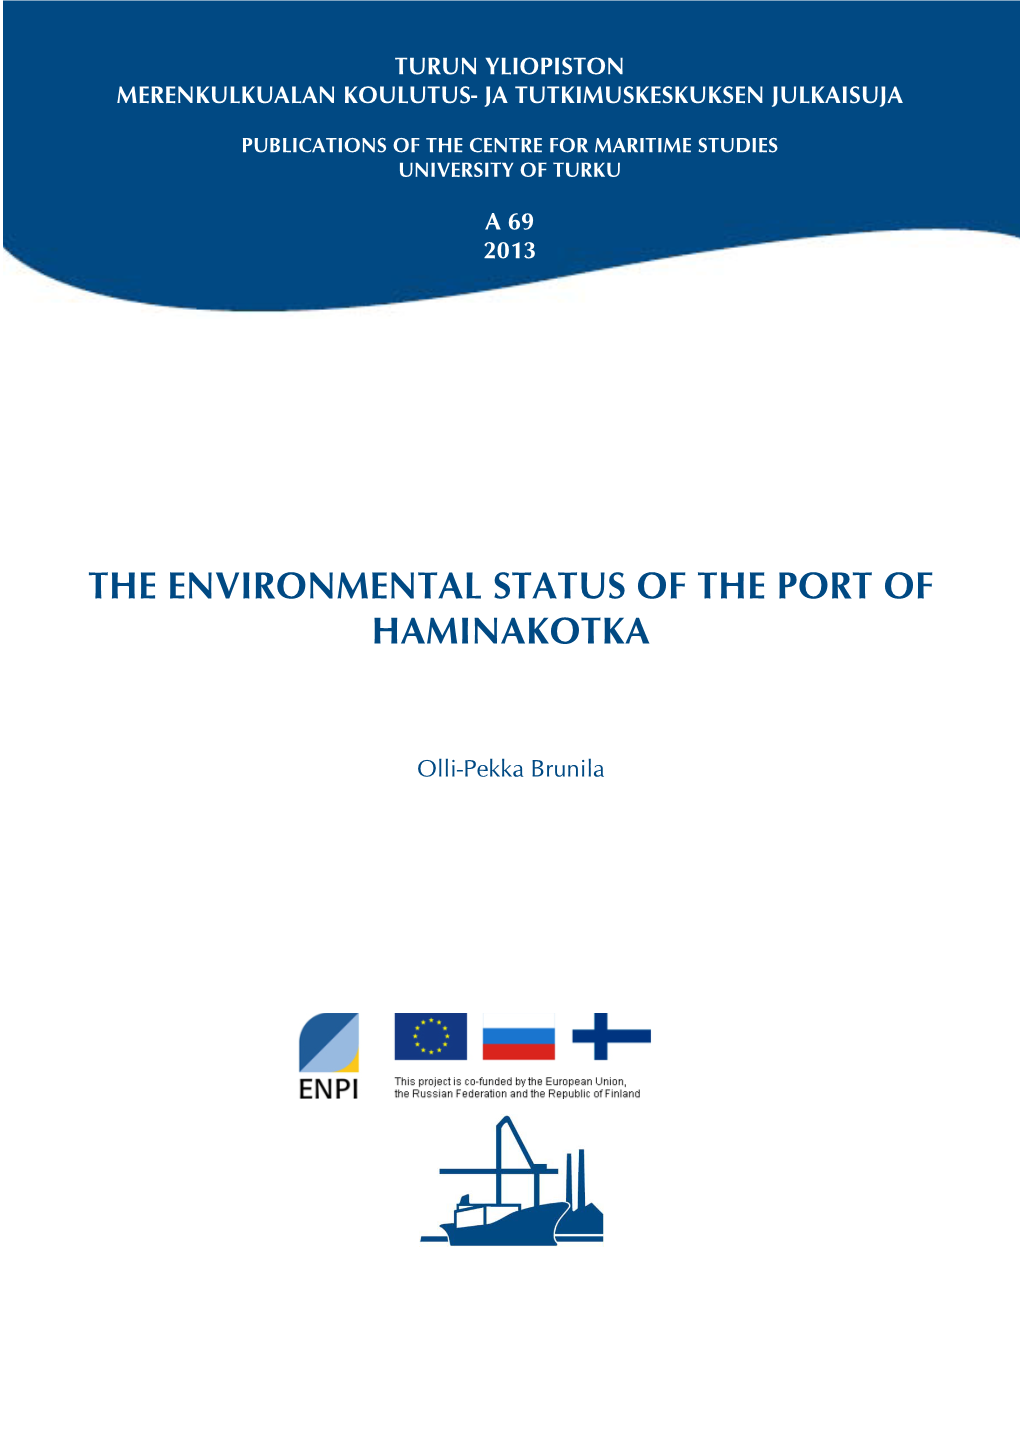 The Environmental Status of the Port of Haminakotka